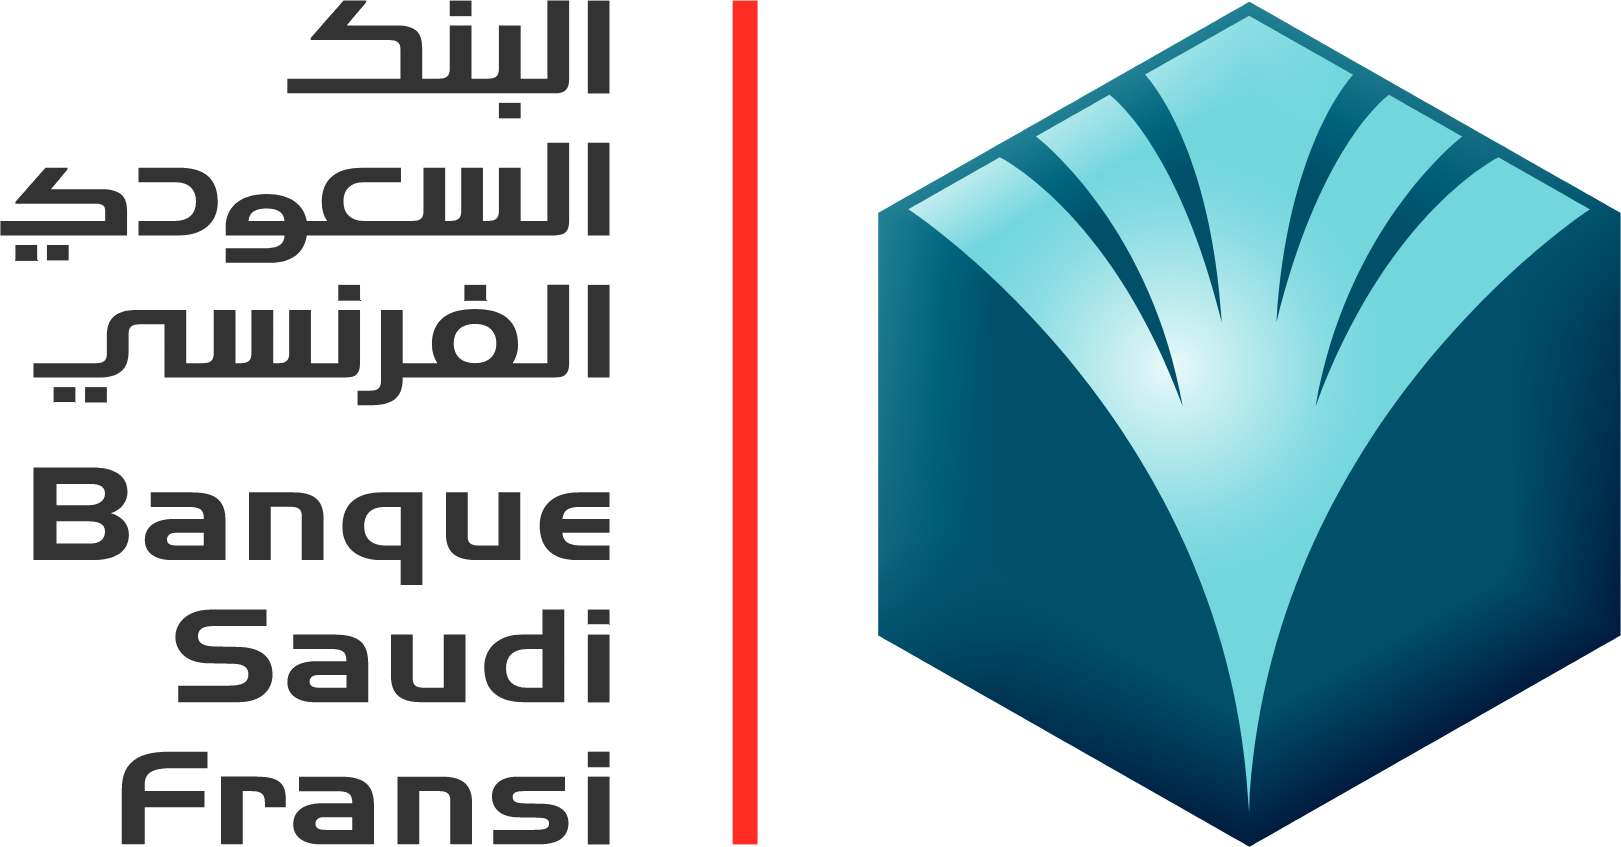 Banque Saudi Fransi logo large (transparent PNG)